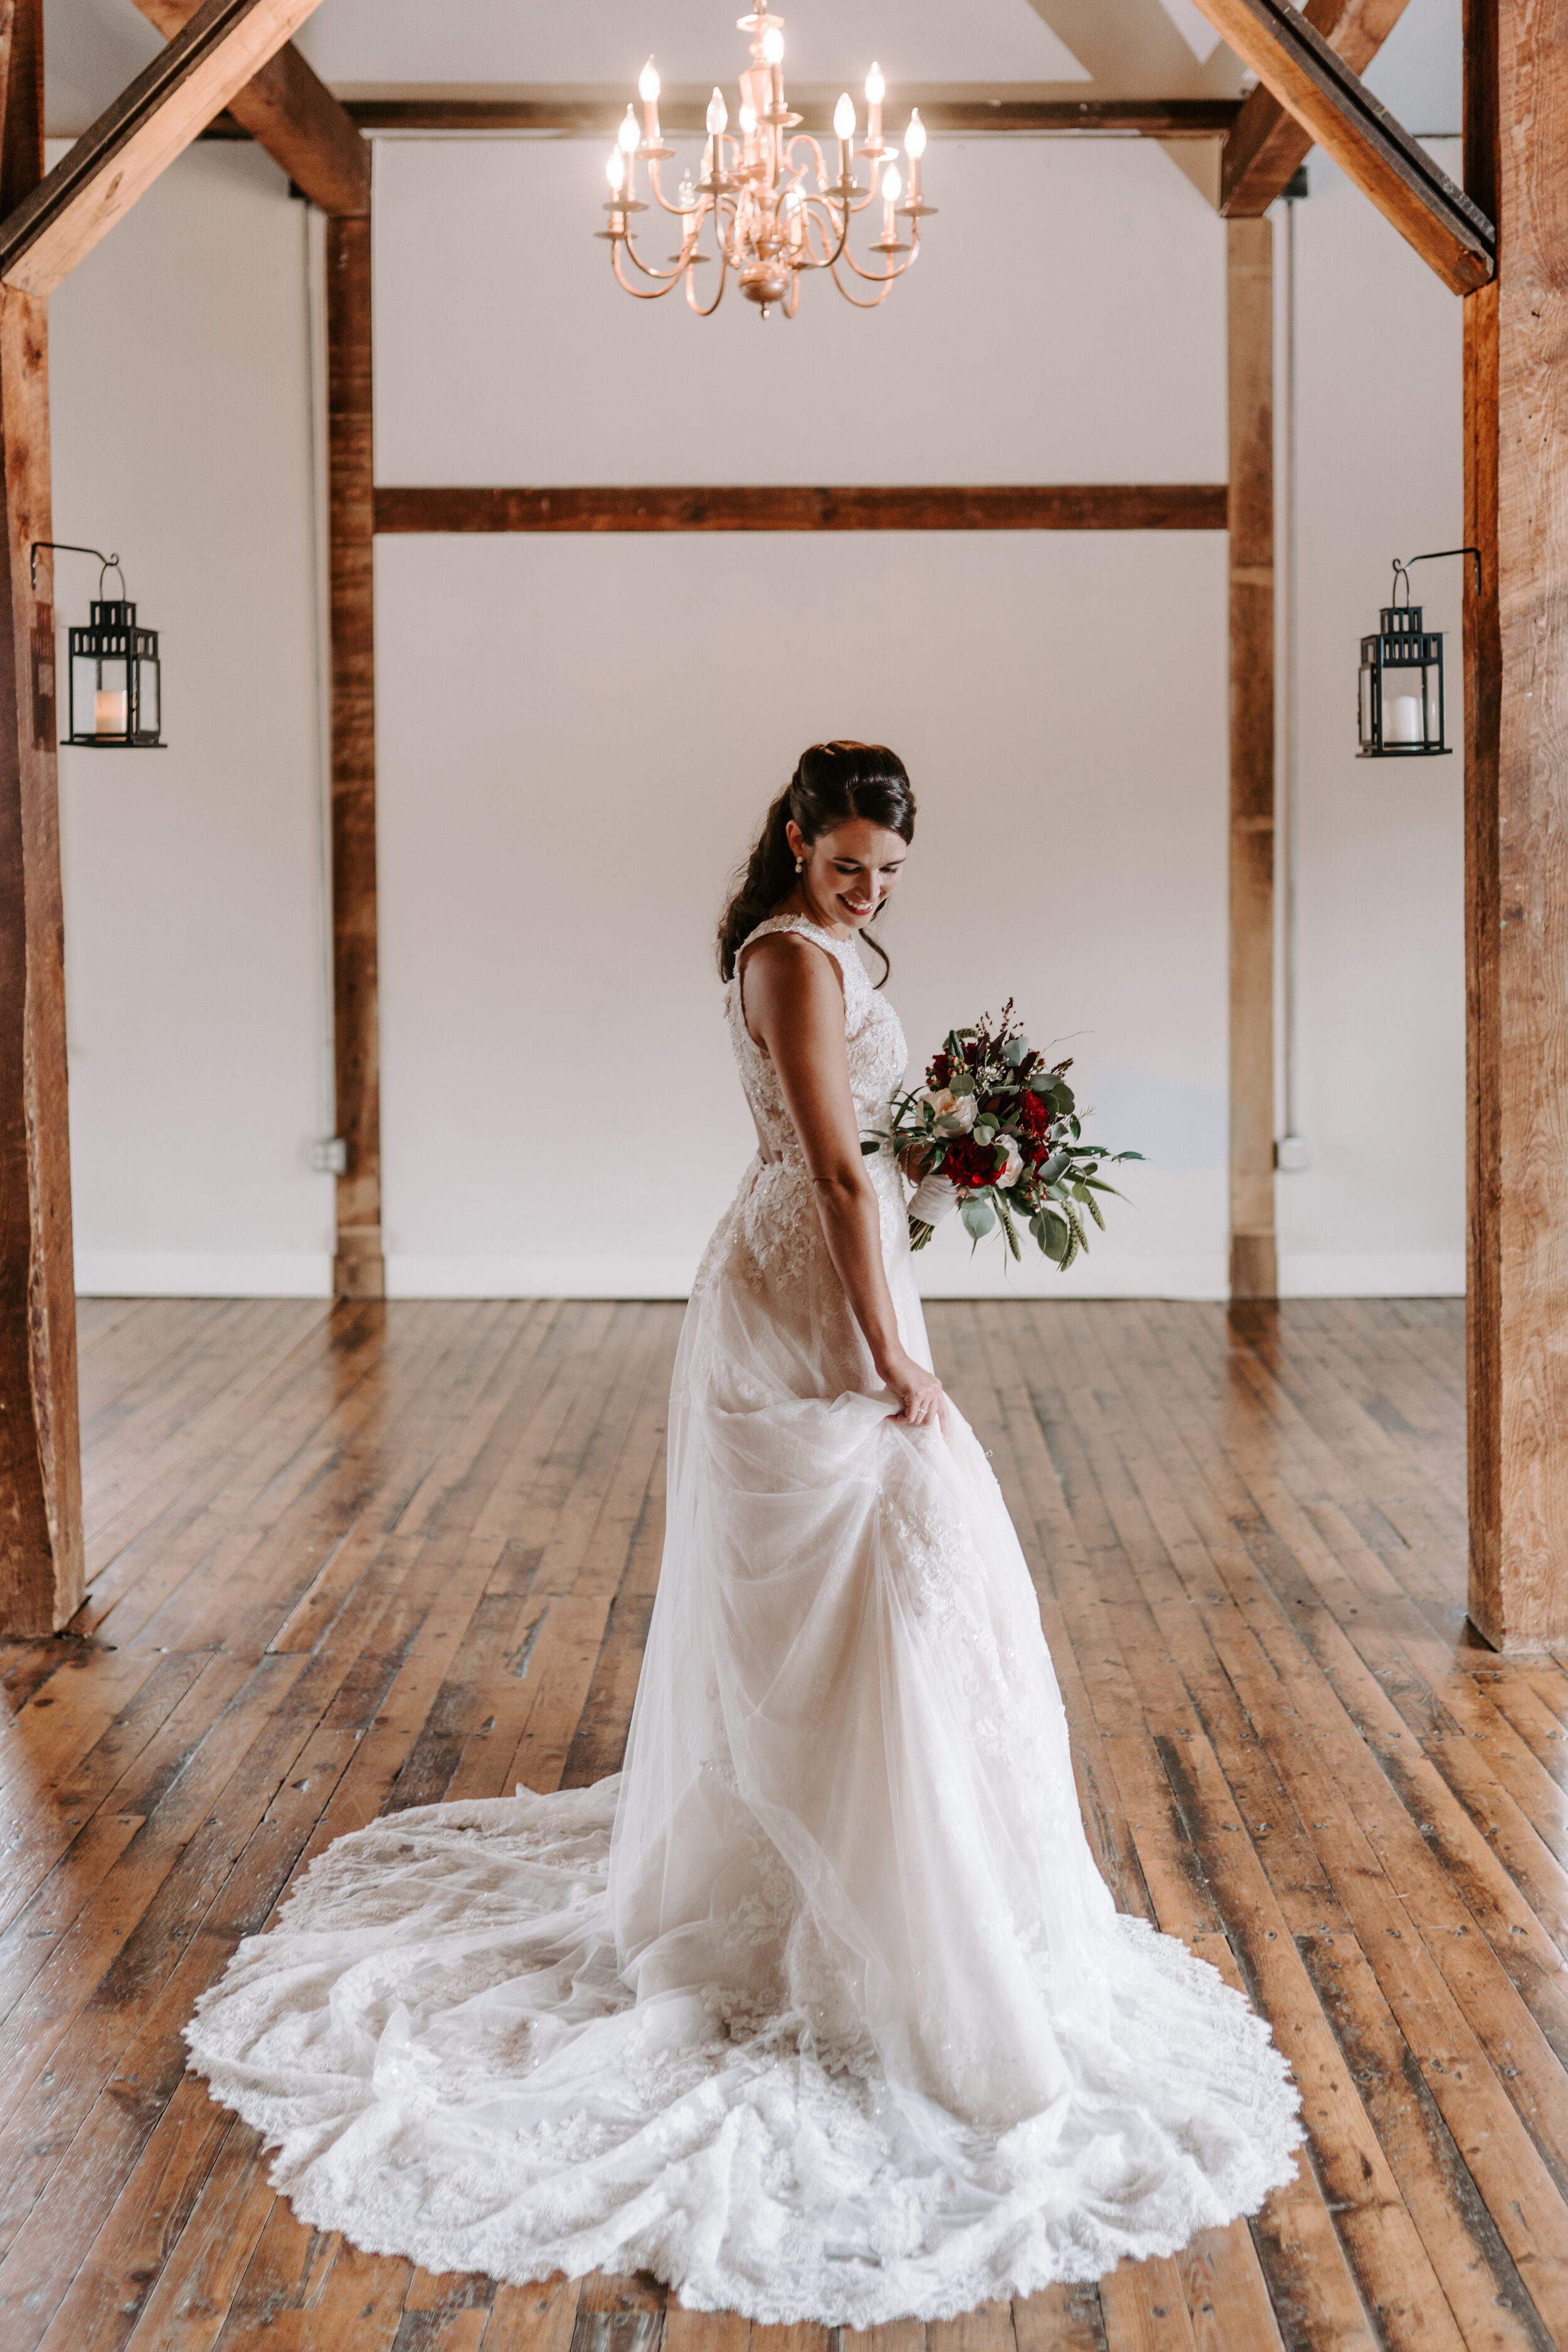 Bridal Portraits Session by Kayli LaFon Photography | Muse At The Mill wedding venue, Winston-Salem, NC